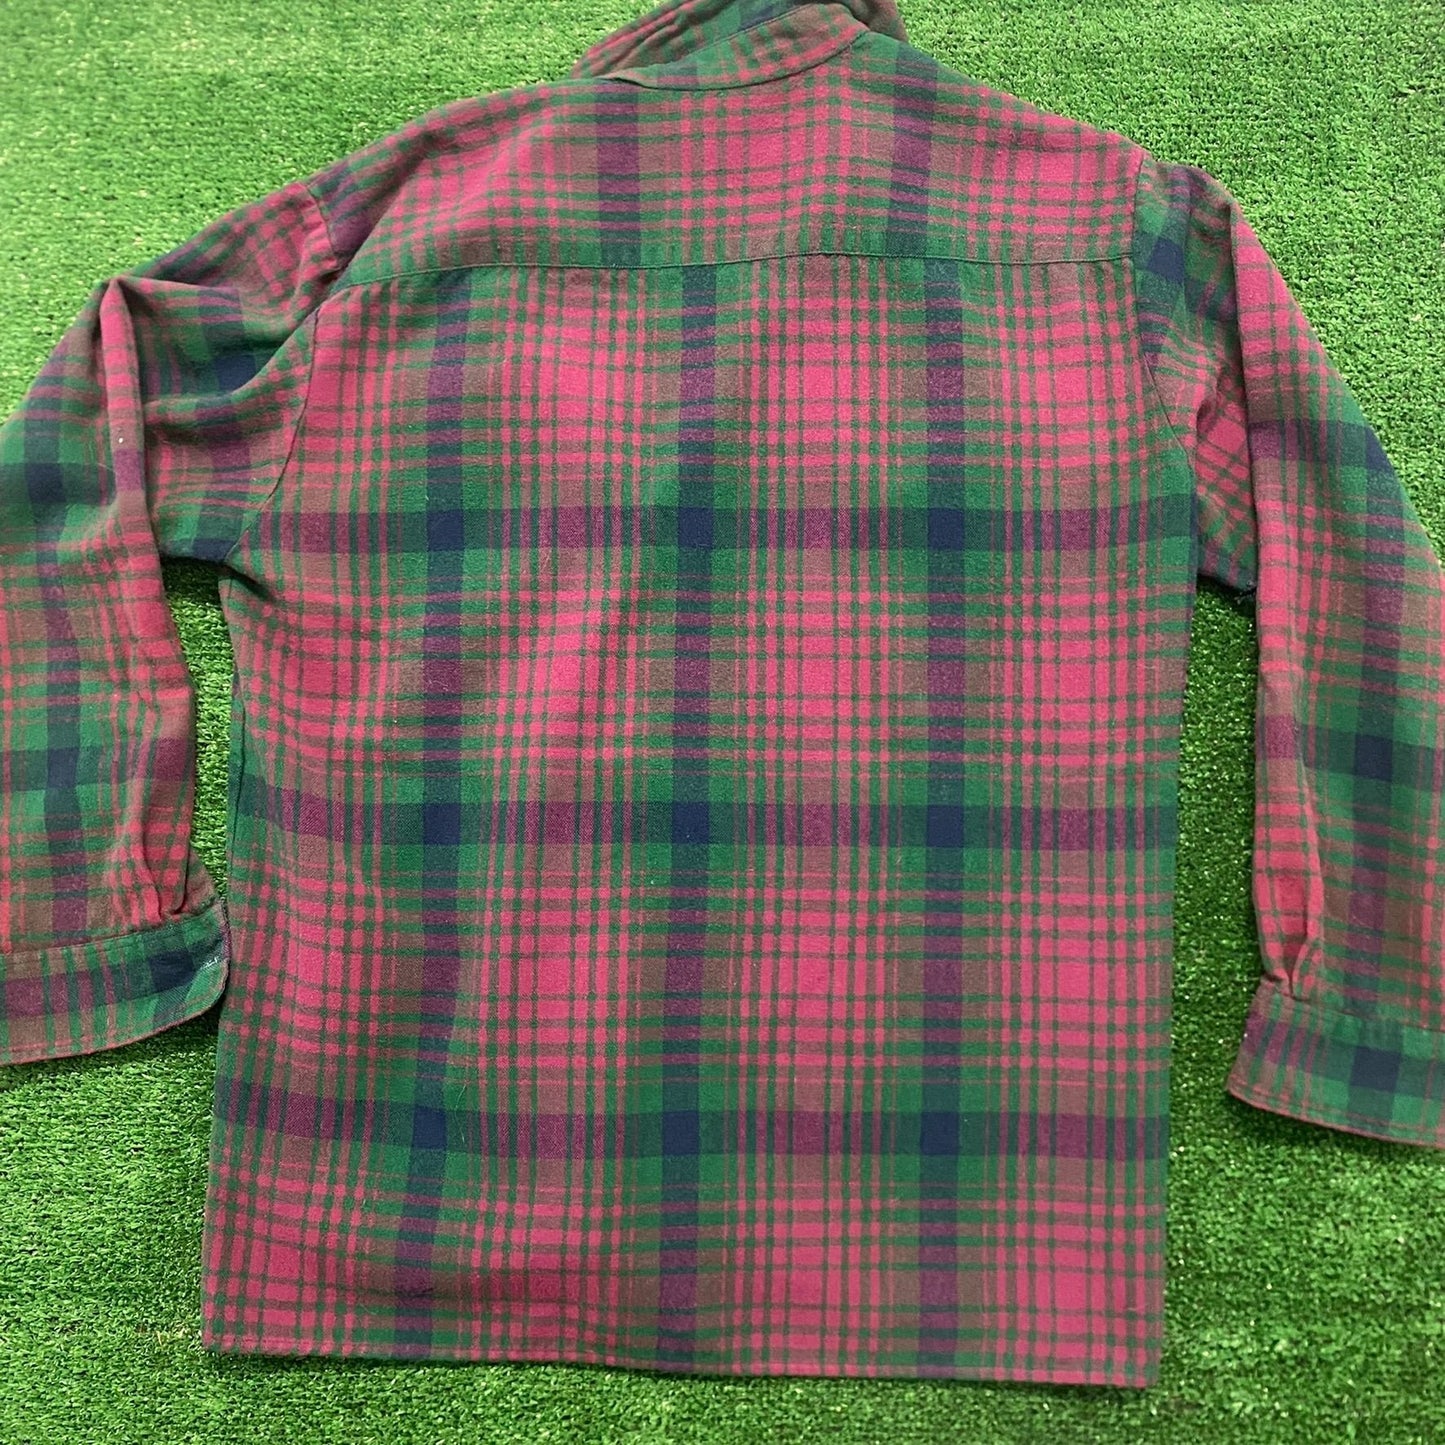 Vintage 90s Grunge Plaid Flannel Shirt